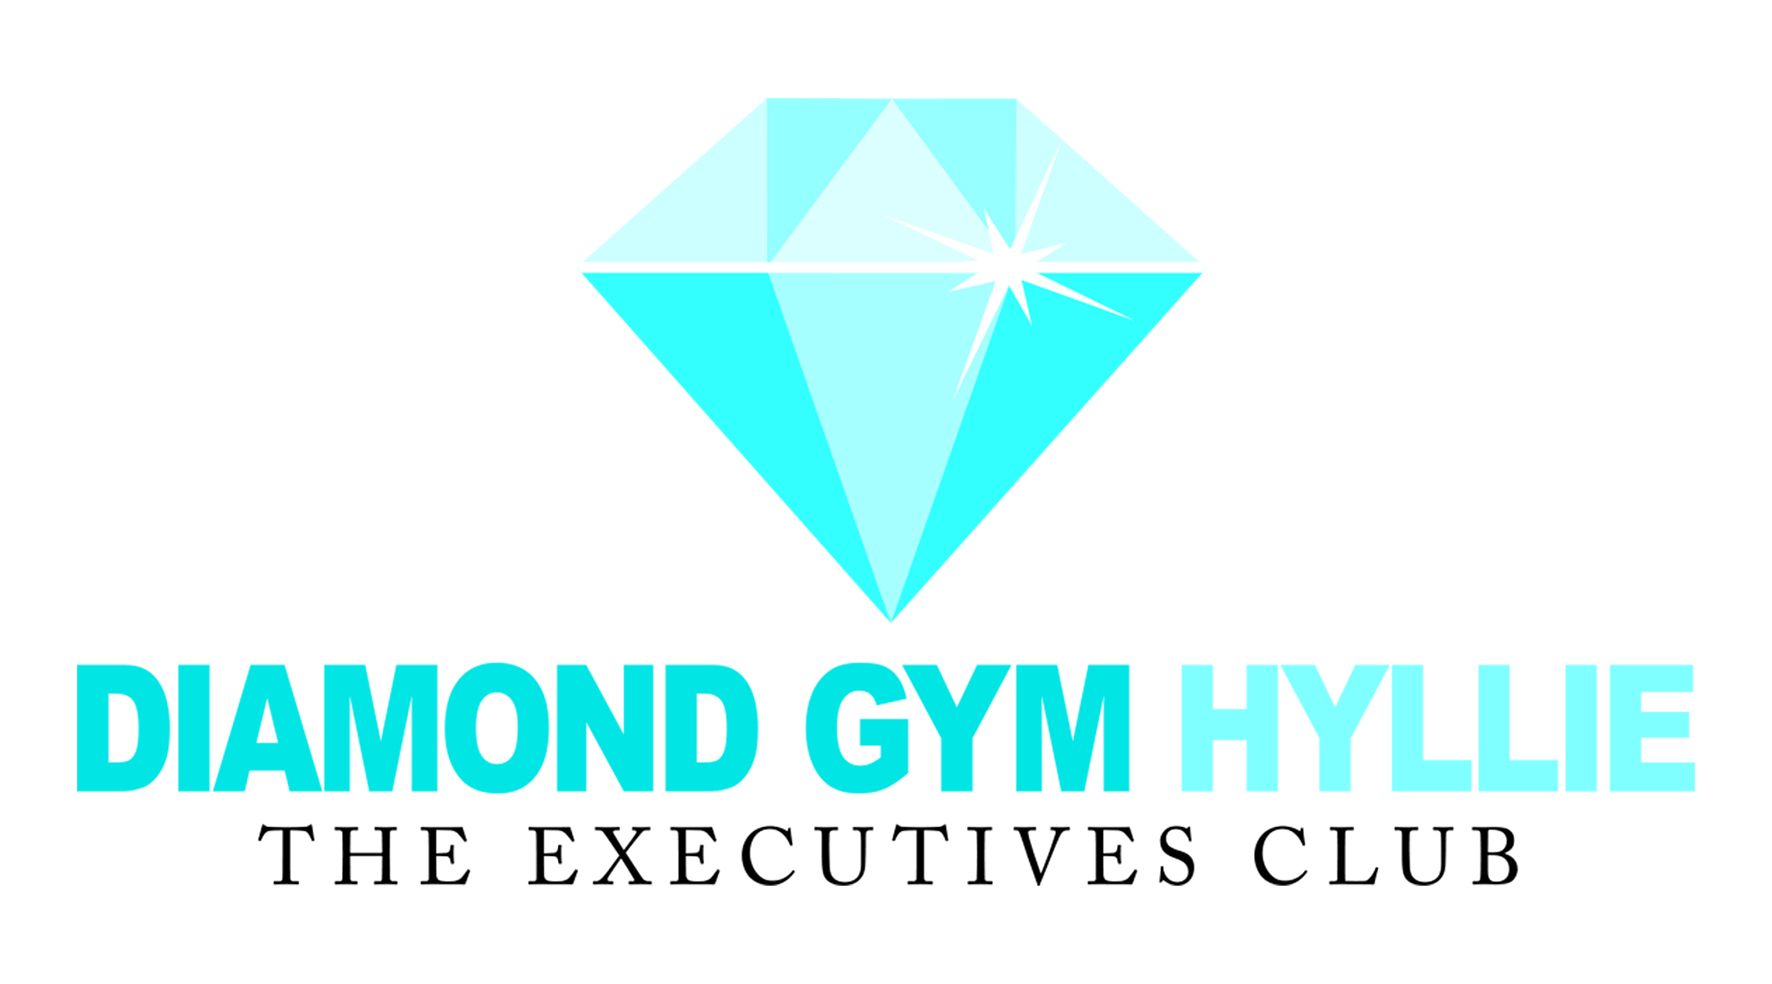 Diamond Gym Hyllie